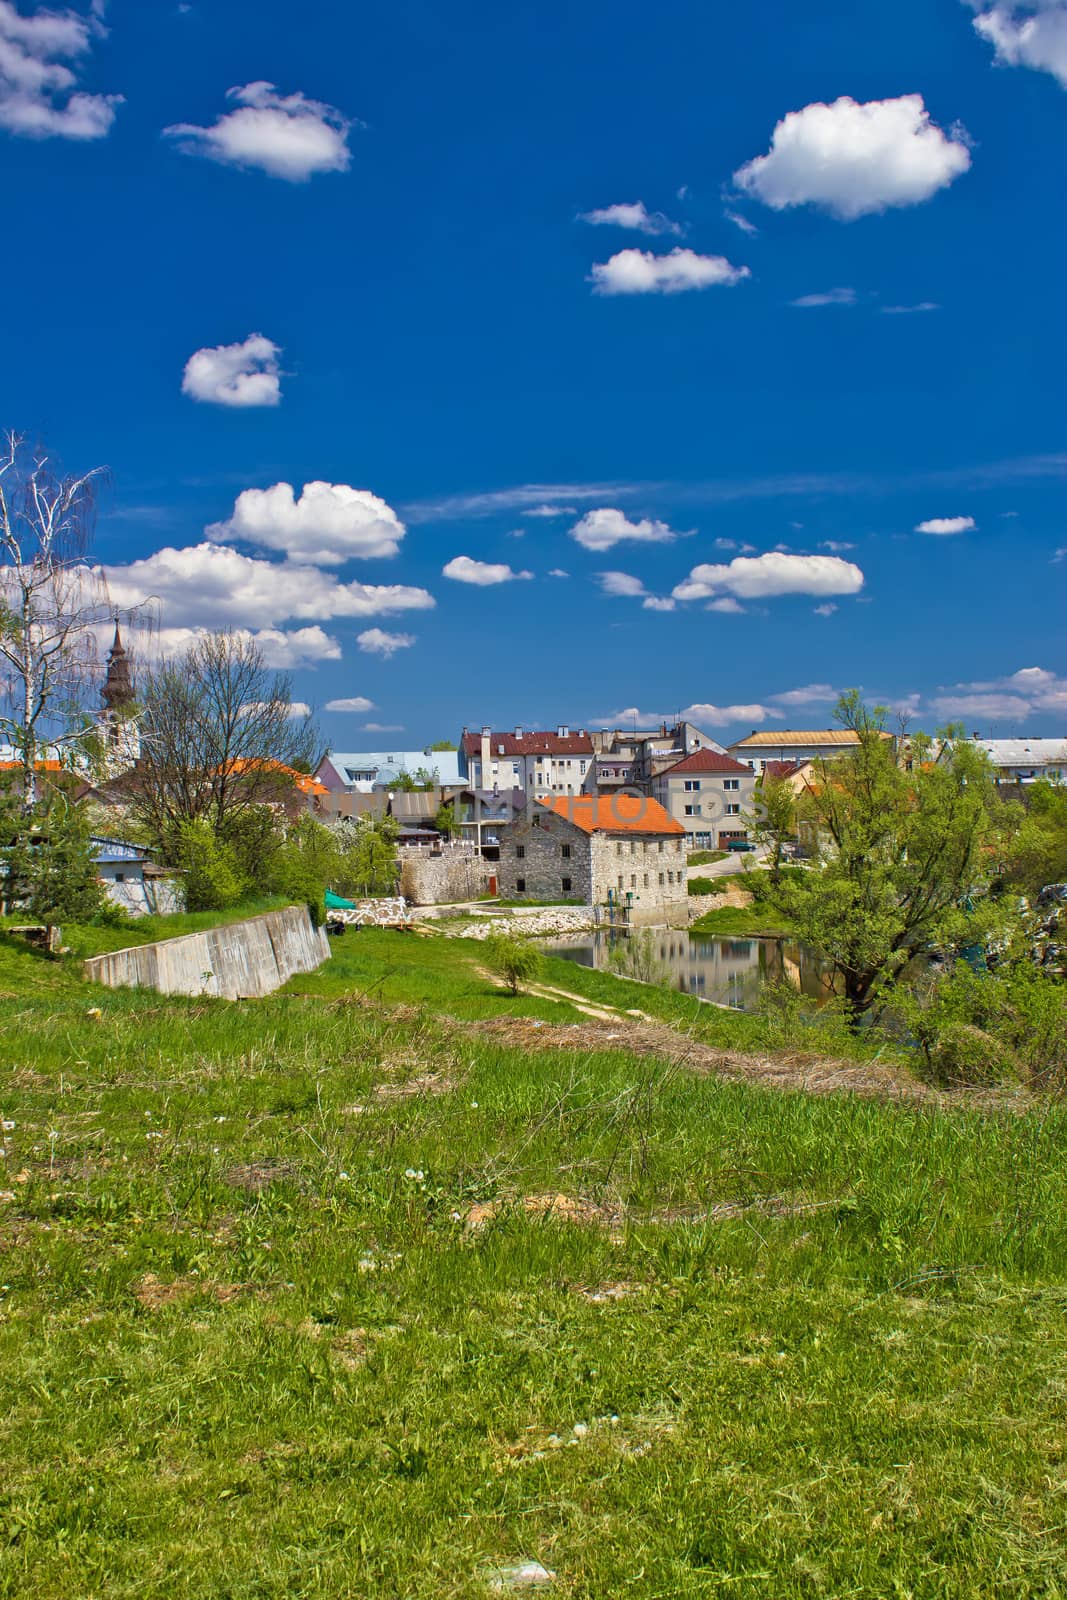 Colors of Gospic, capital town of Lika region in Croatia